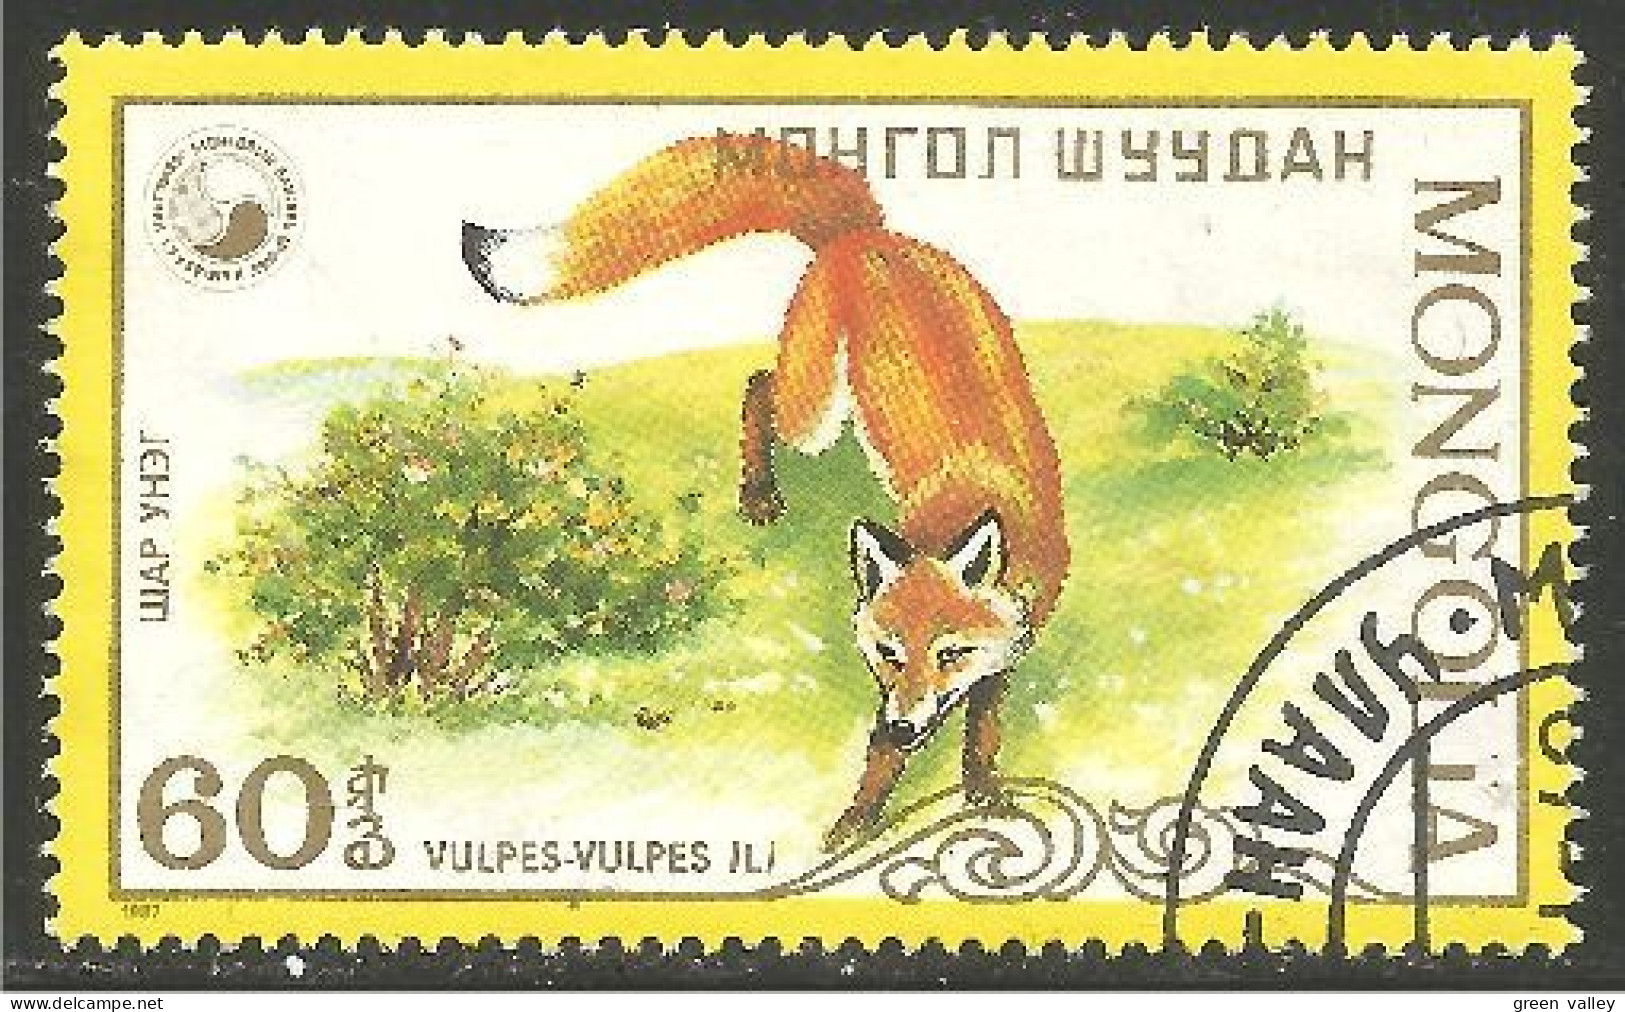 DG-31 Mongolie Renard Fox Fuchs Volpe Raposa Zorro Vos - Cani